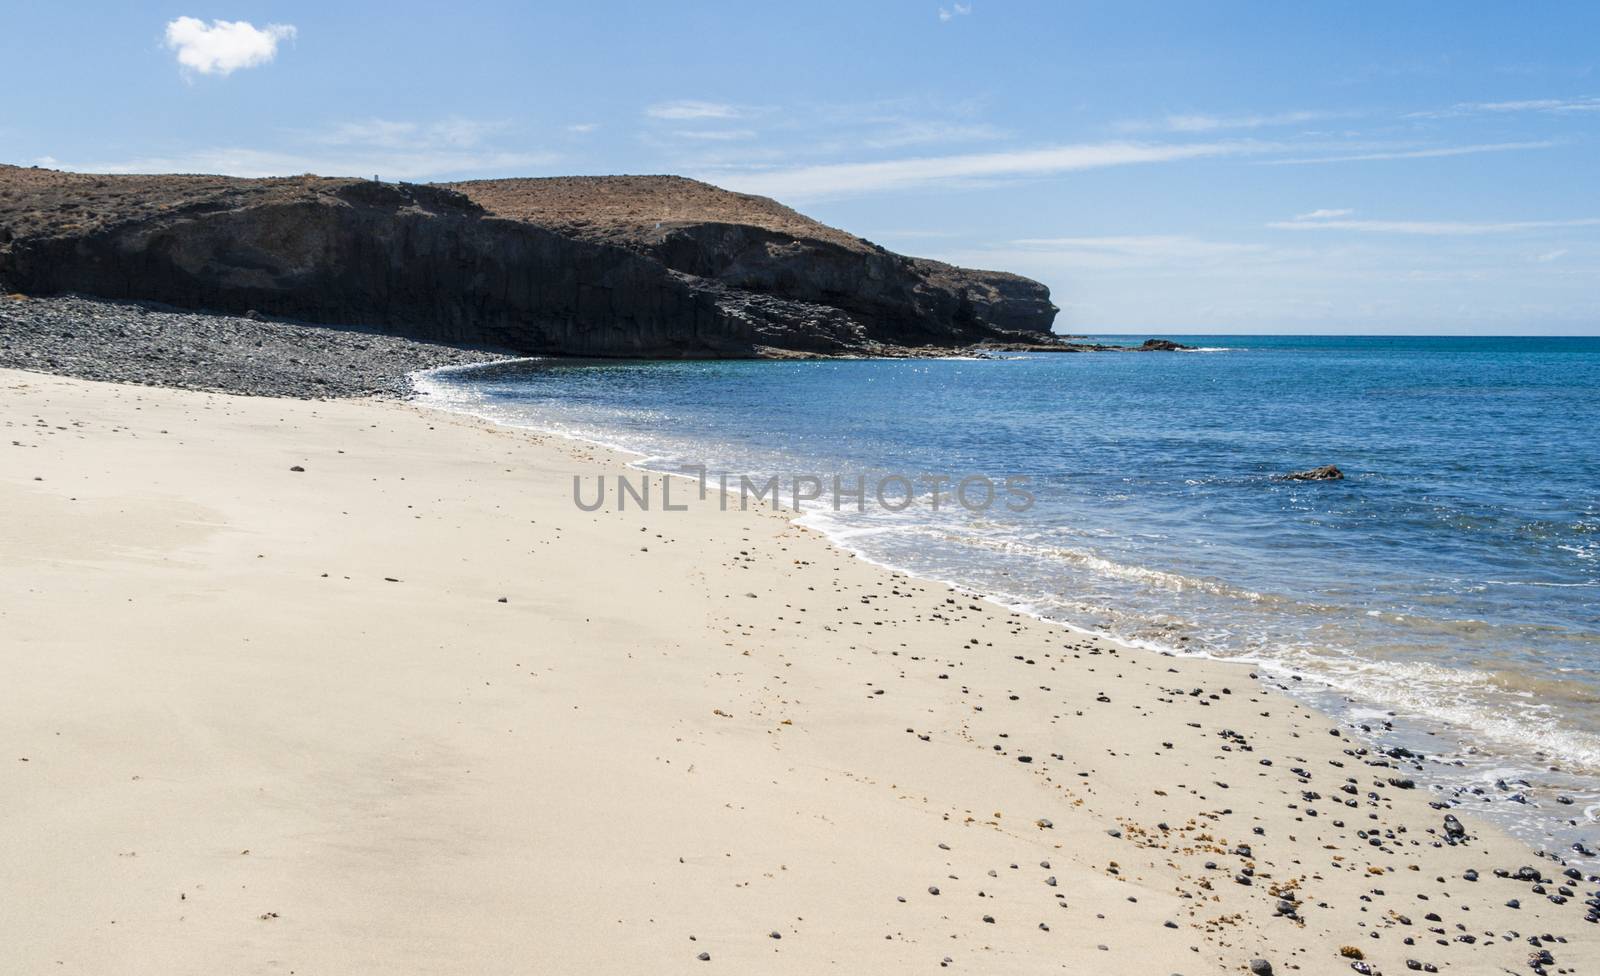 Wild Beach in Fuerteventura, Canary Islands. Spain. by tanaonte